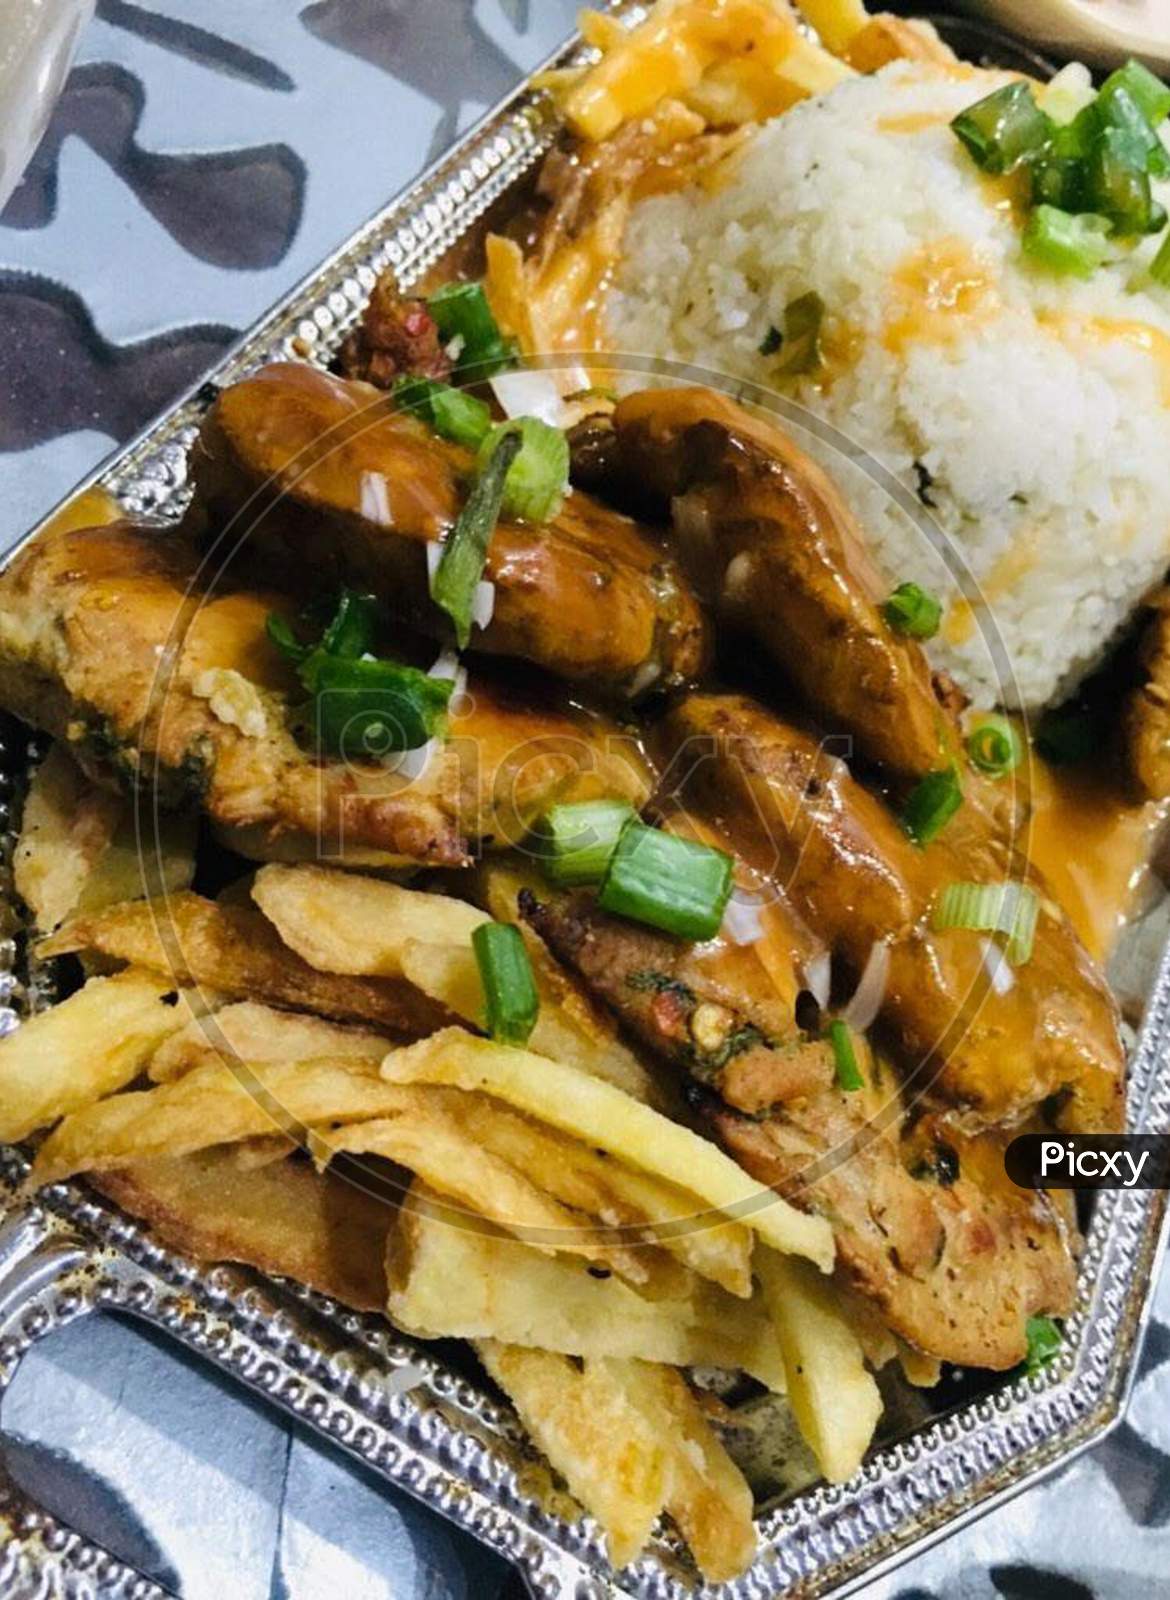 Pakistani food namely Naan and Potato Fries with jar